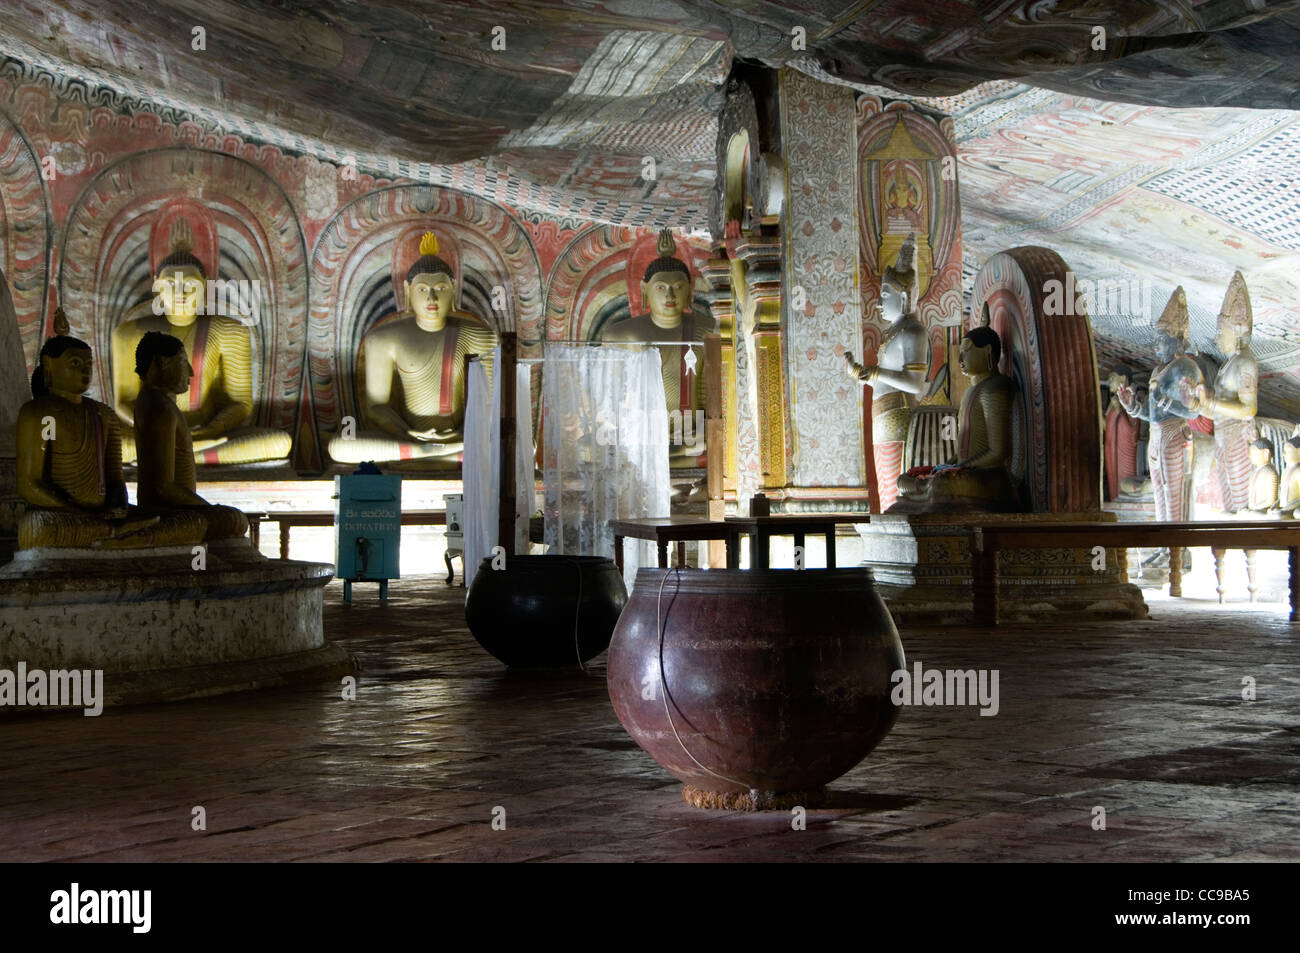 Sri lanka buddhist art hi-res stock photography and images